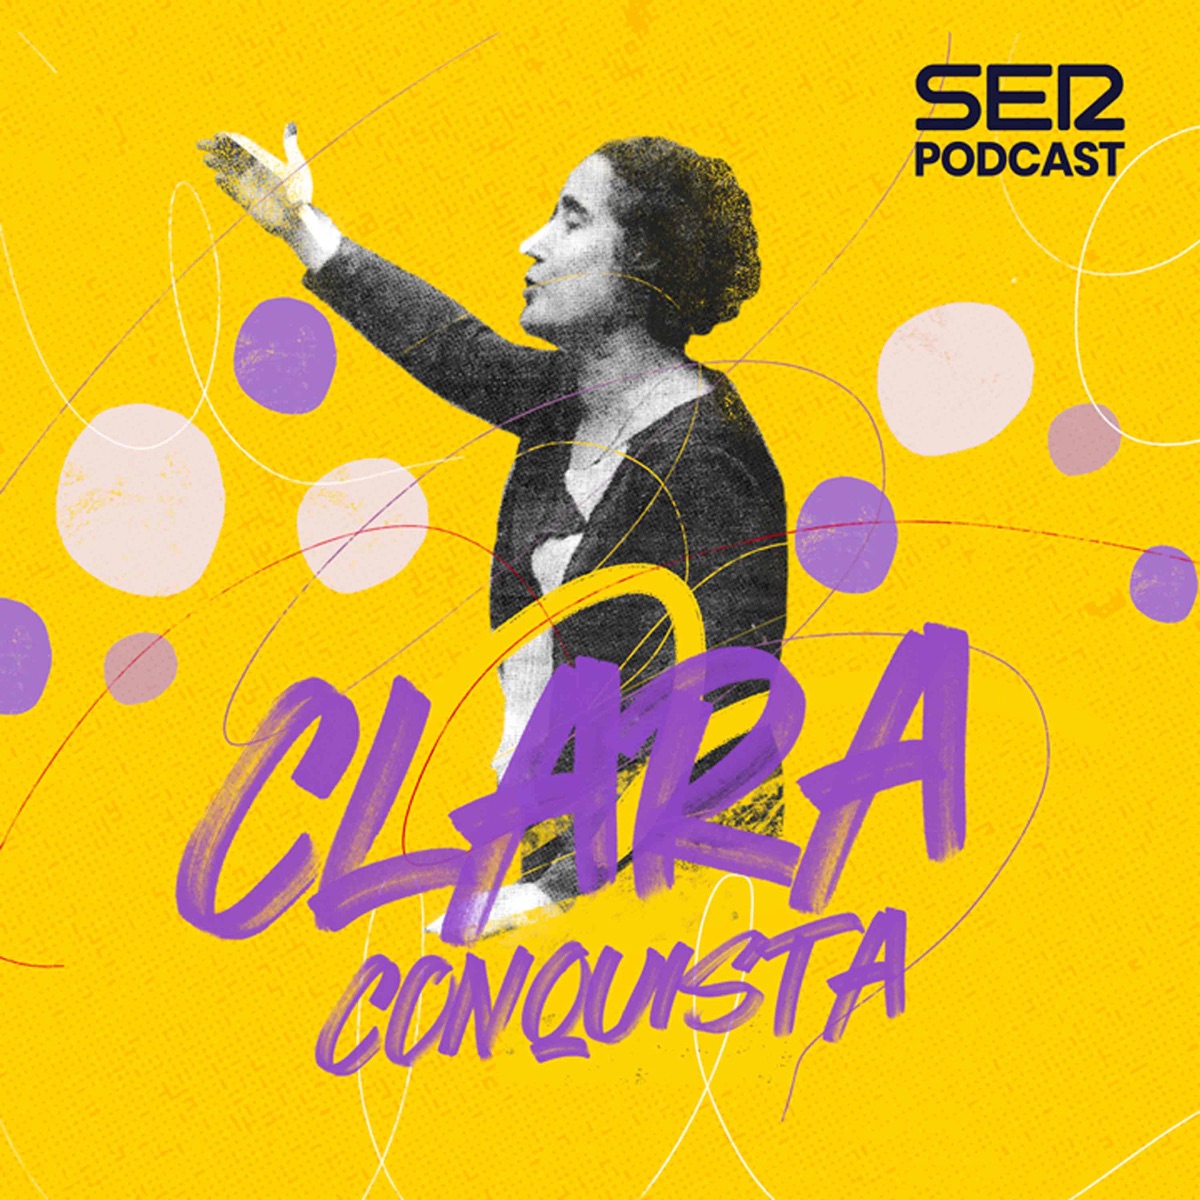 Clara conquista – Podcast – Podtail